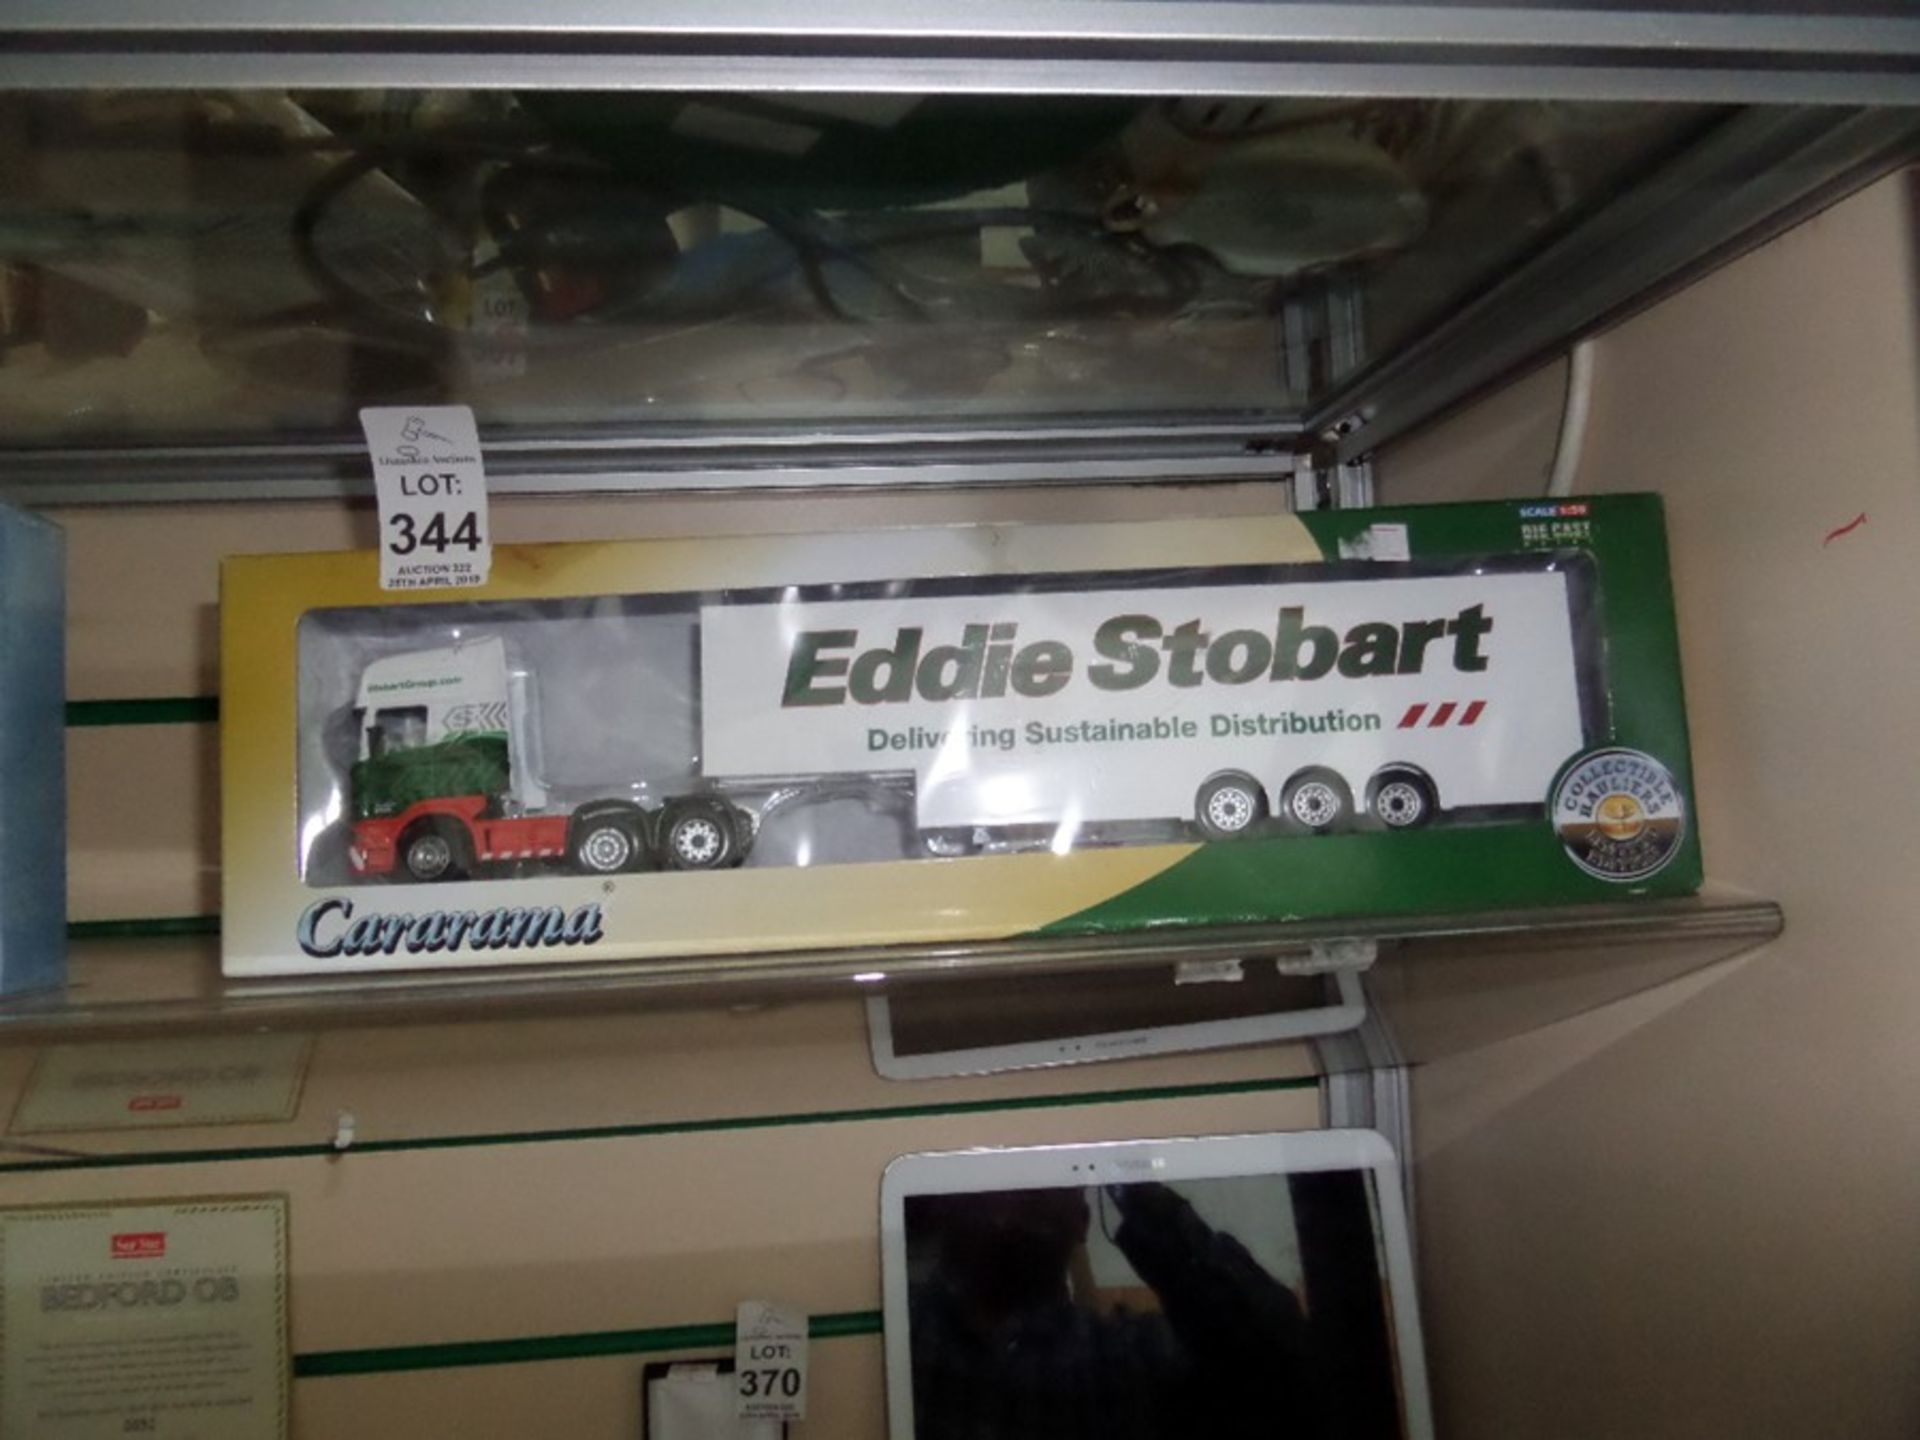 BOXED EDDIE STOBART LORRY - Image 2 of 2